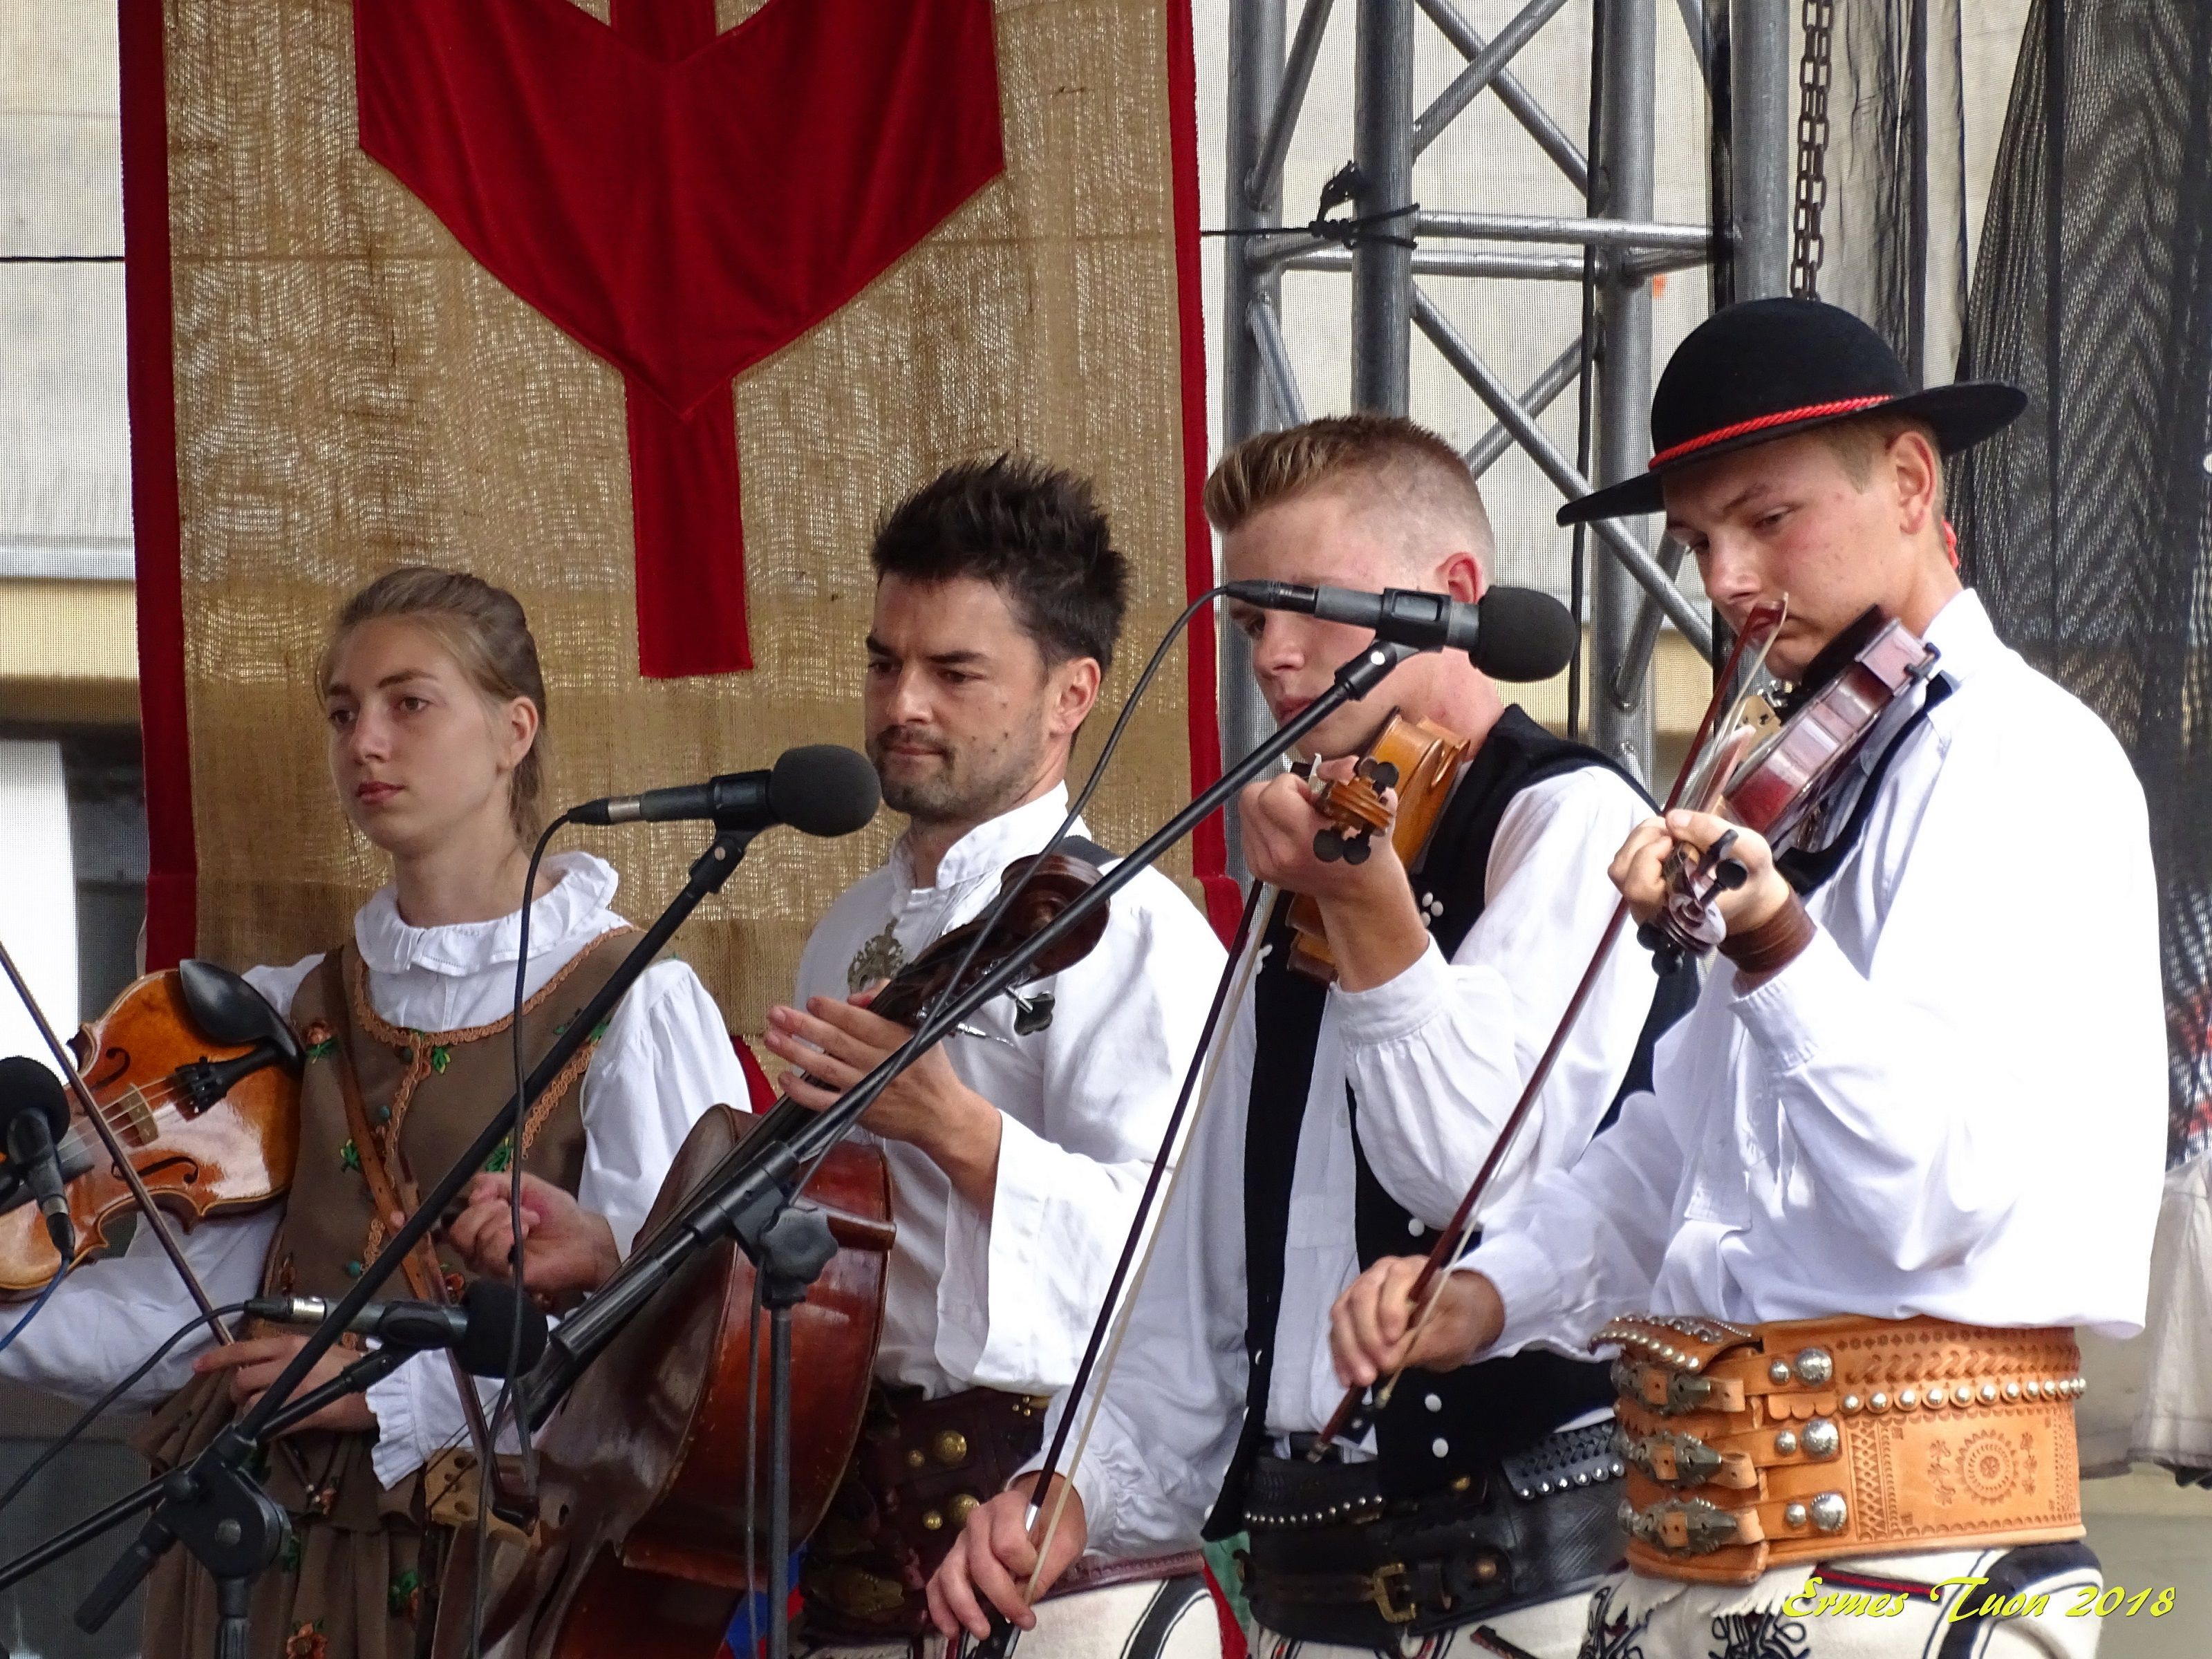 Caption - Folk music played in the street market - Krakow, Poland